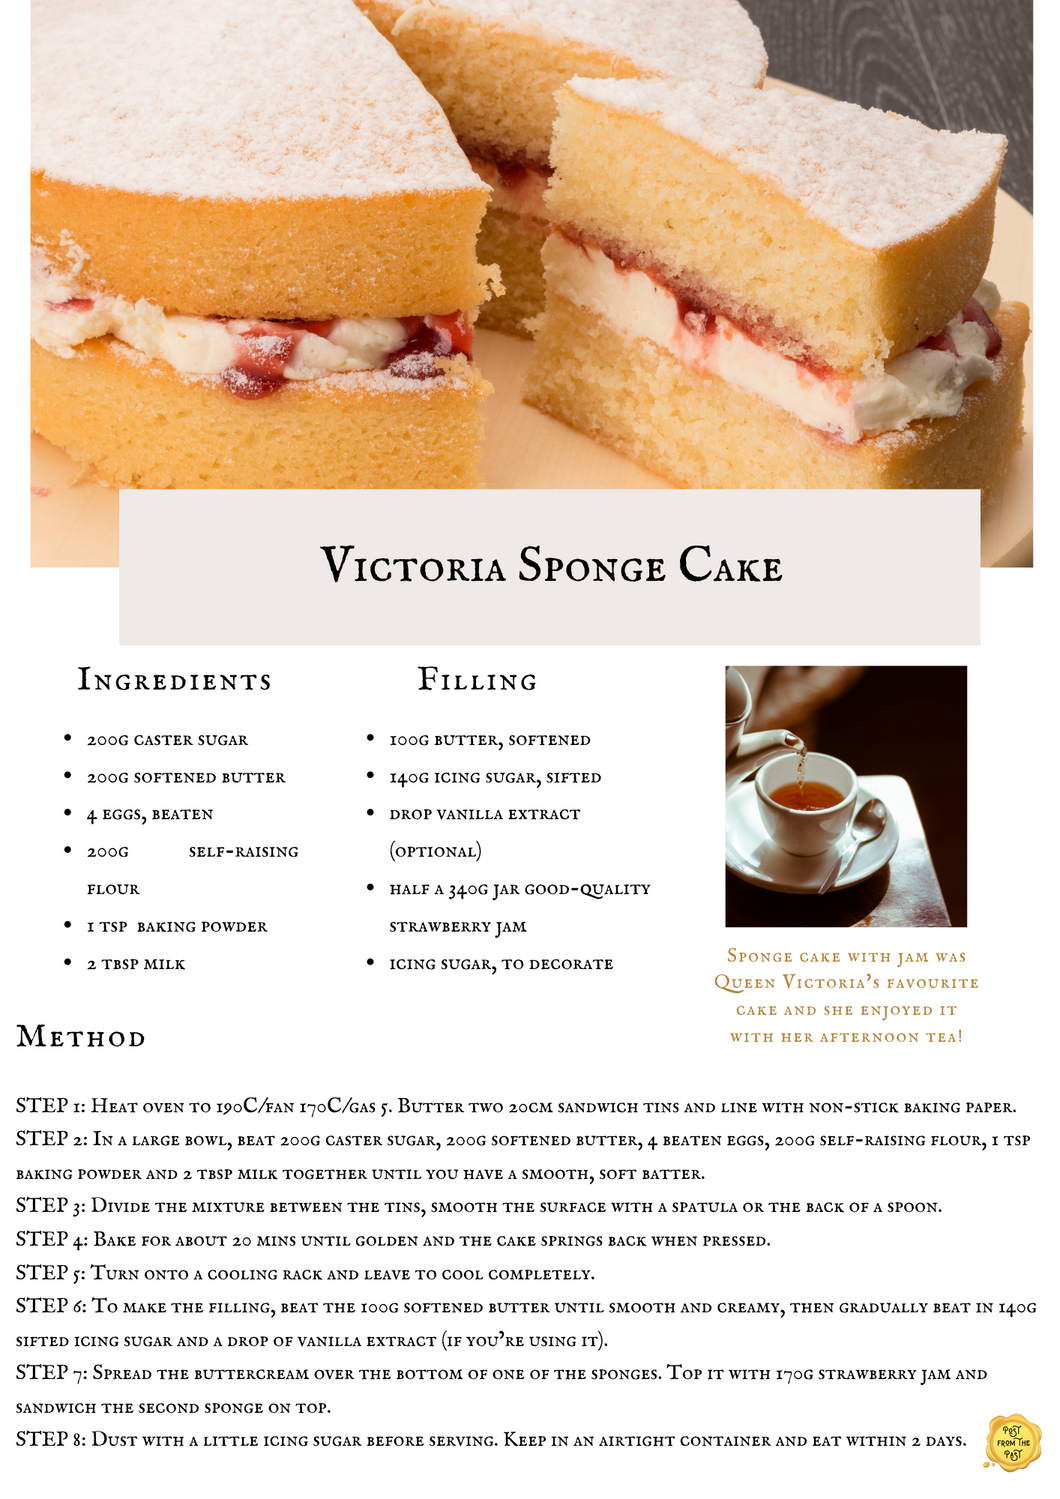 Queen Victoria - Victoria Sponge Cake Recipe